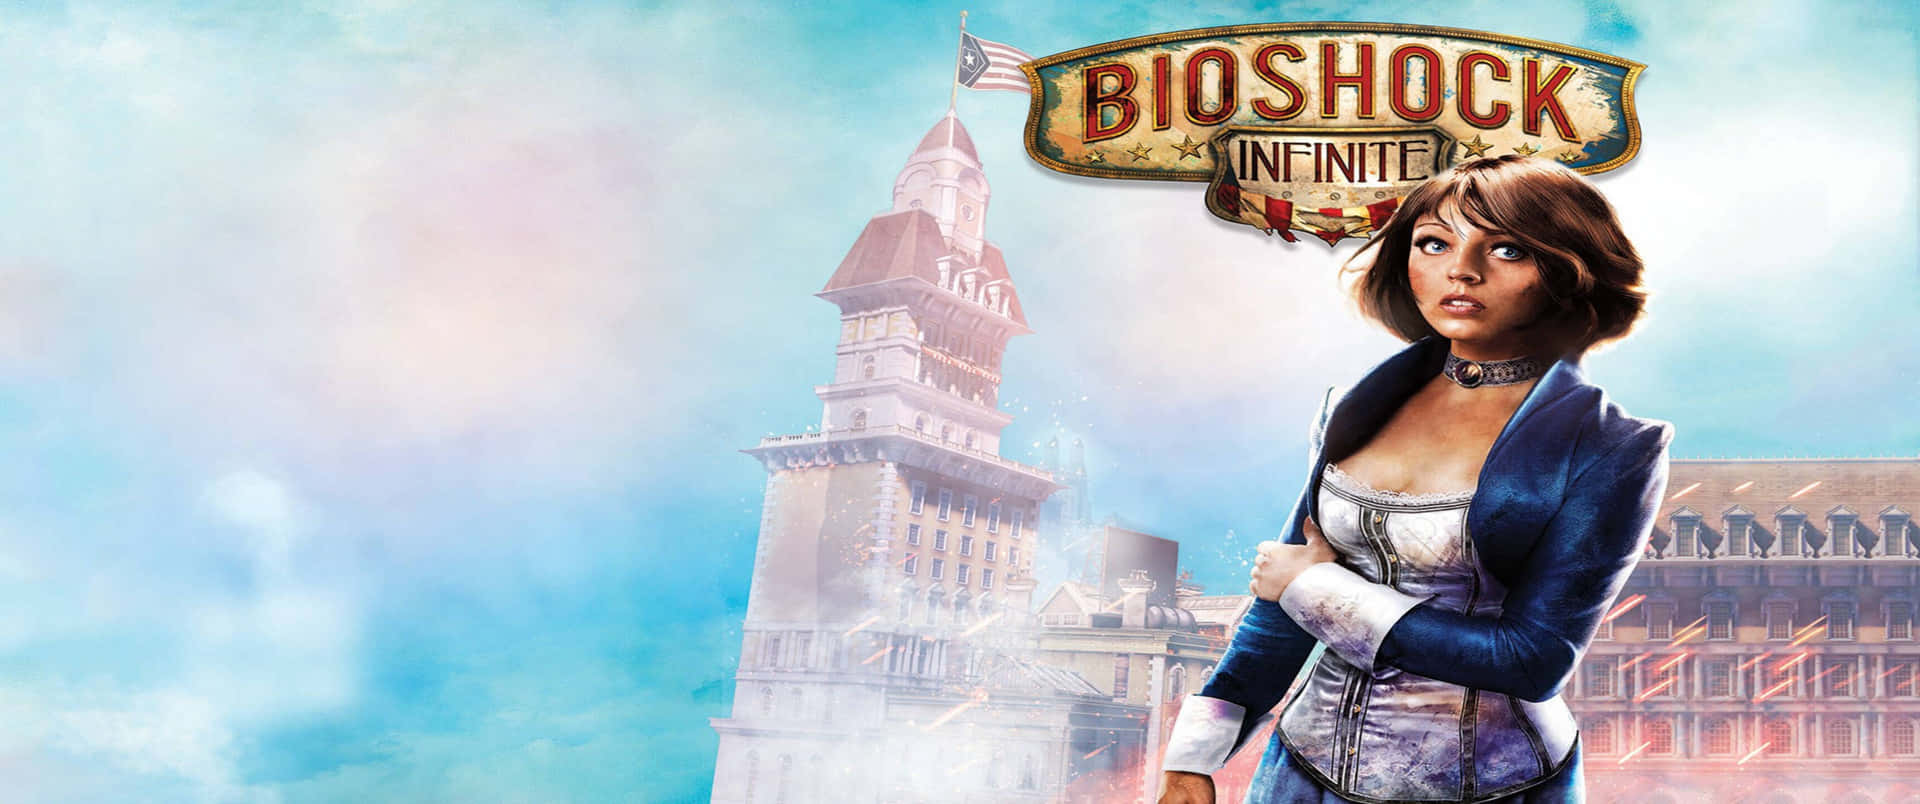 Captivating Bioshock Infinite 3440x1440p Background